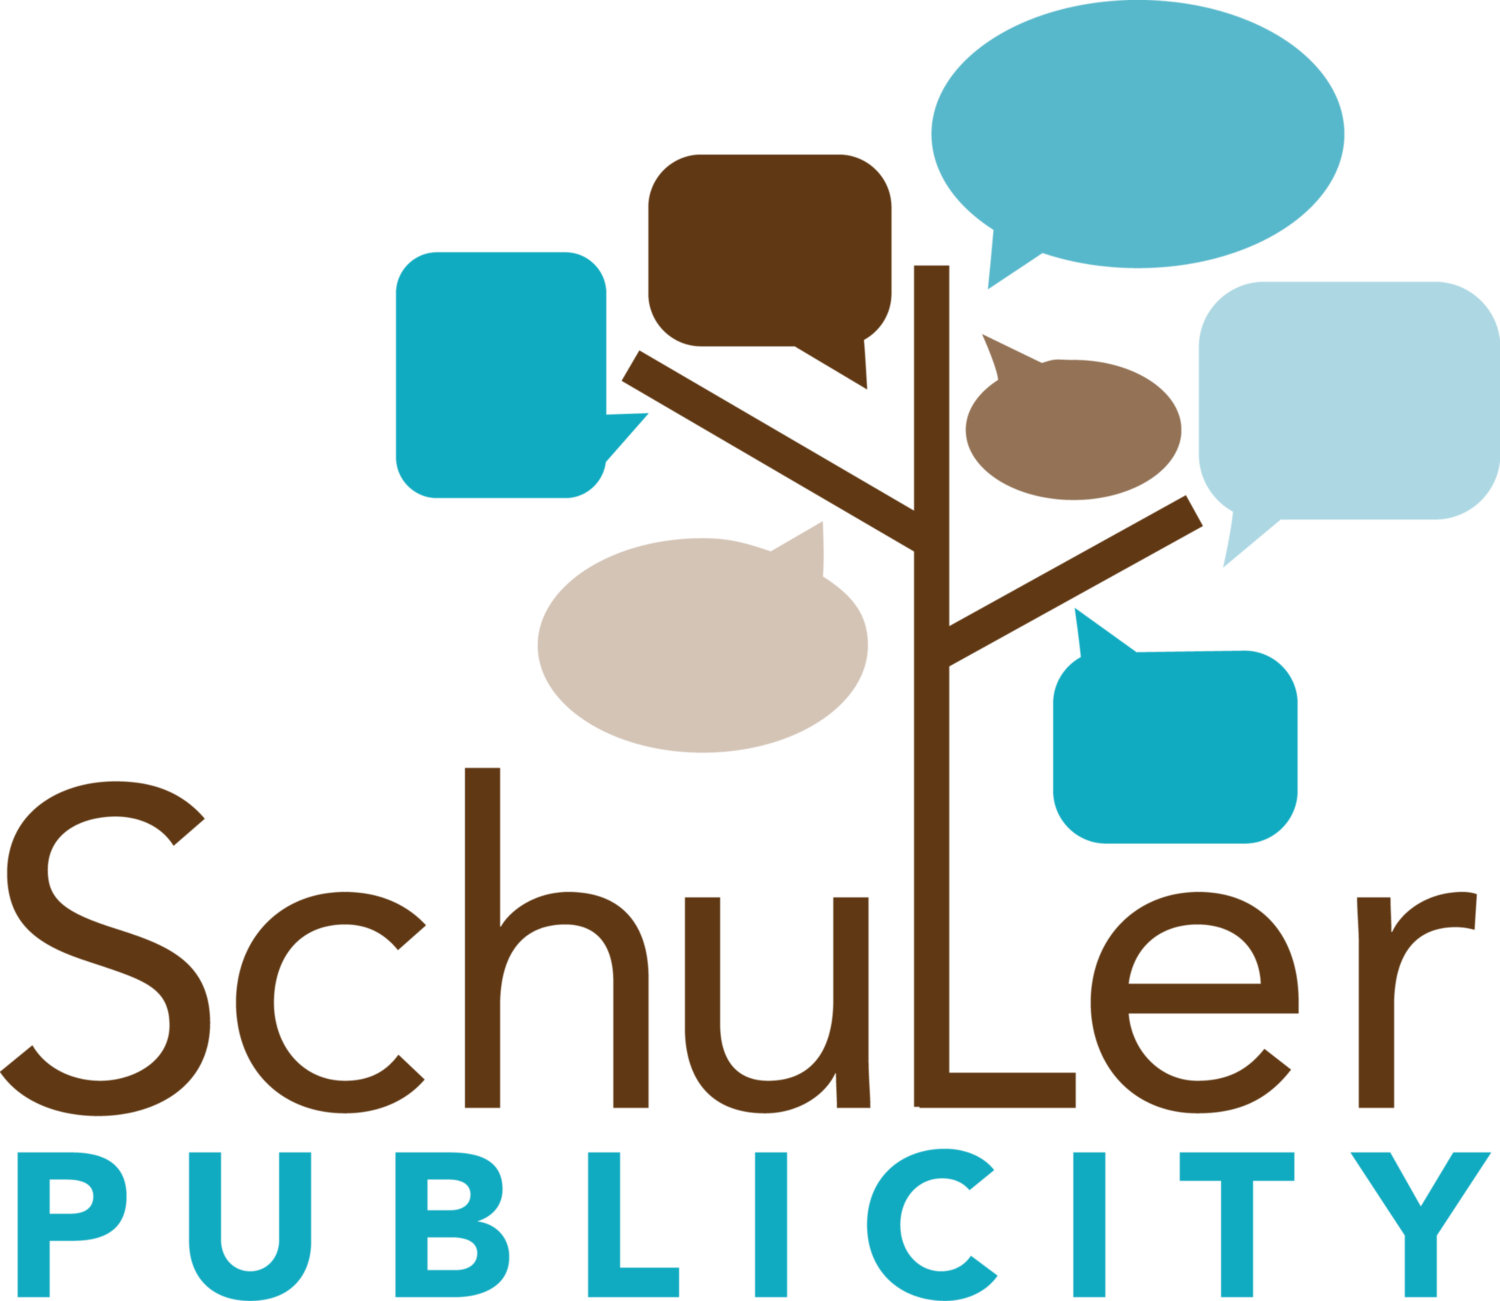 Publicity Transparent Background - California Charter Schools Logo (1500x1301)